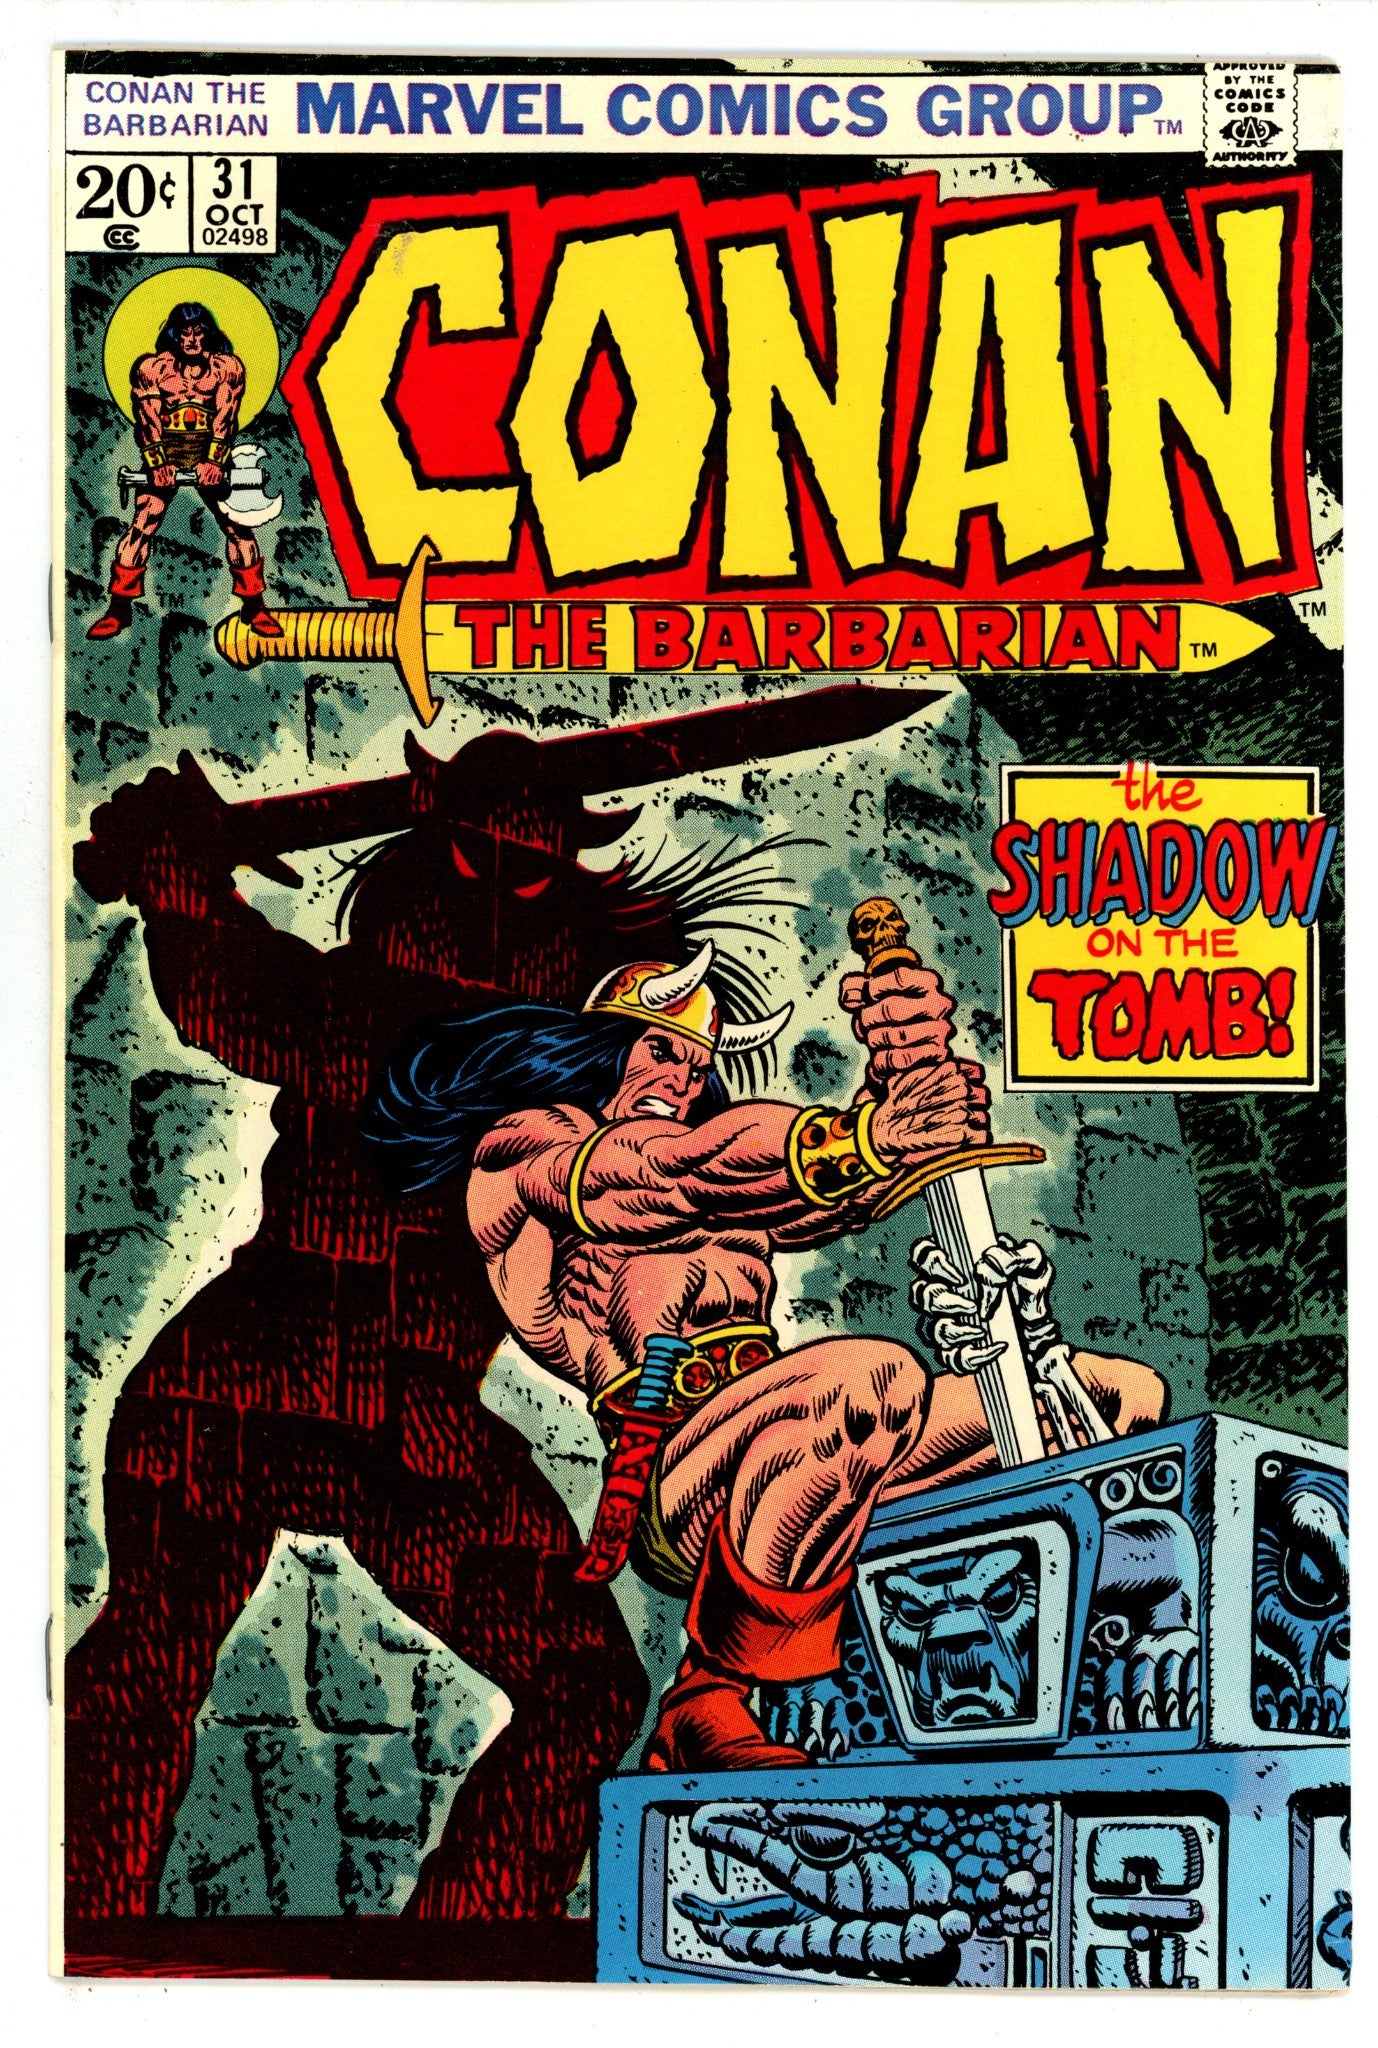 Conan the Barbarian Vol 1 31 VG+ (4.5) (1973) 